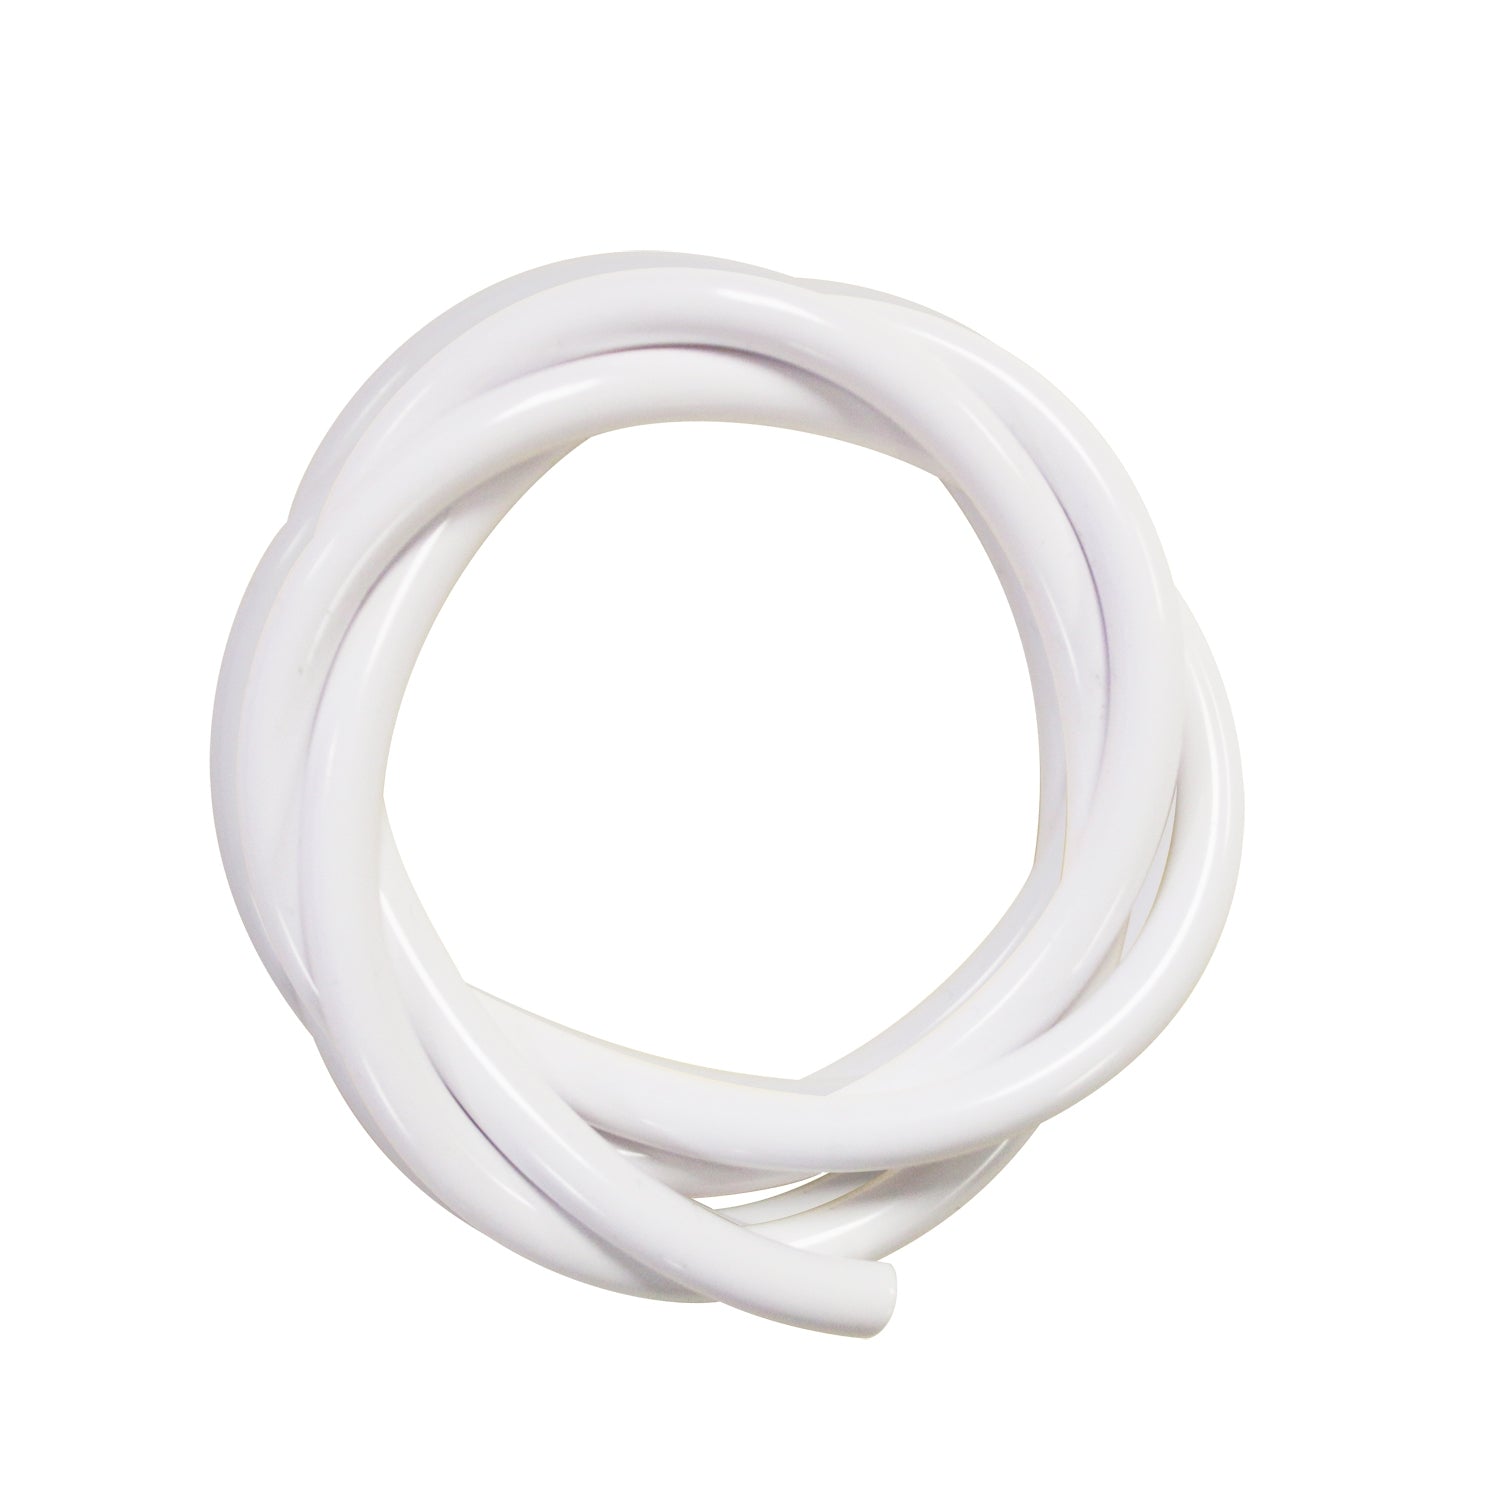 Single Soft White Tubing 1/4", 10 ft. per unit